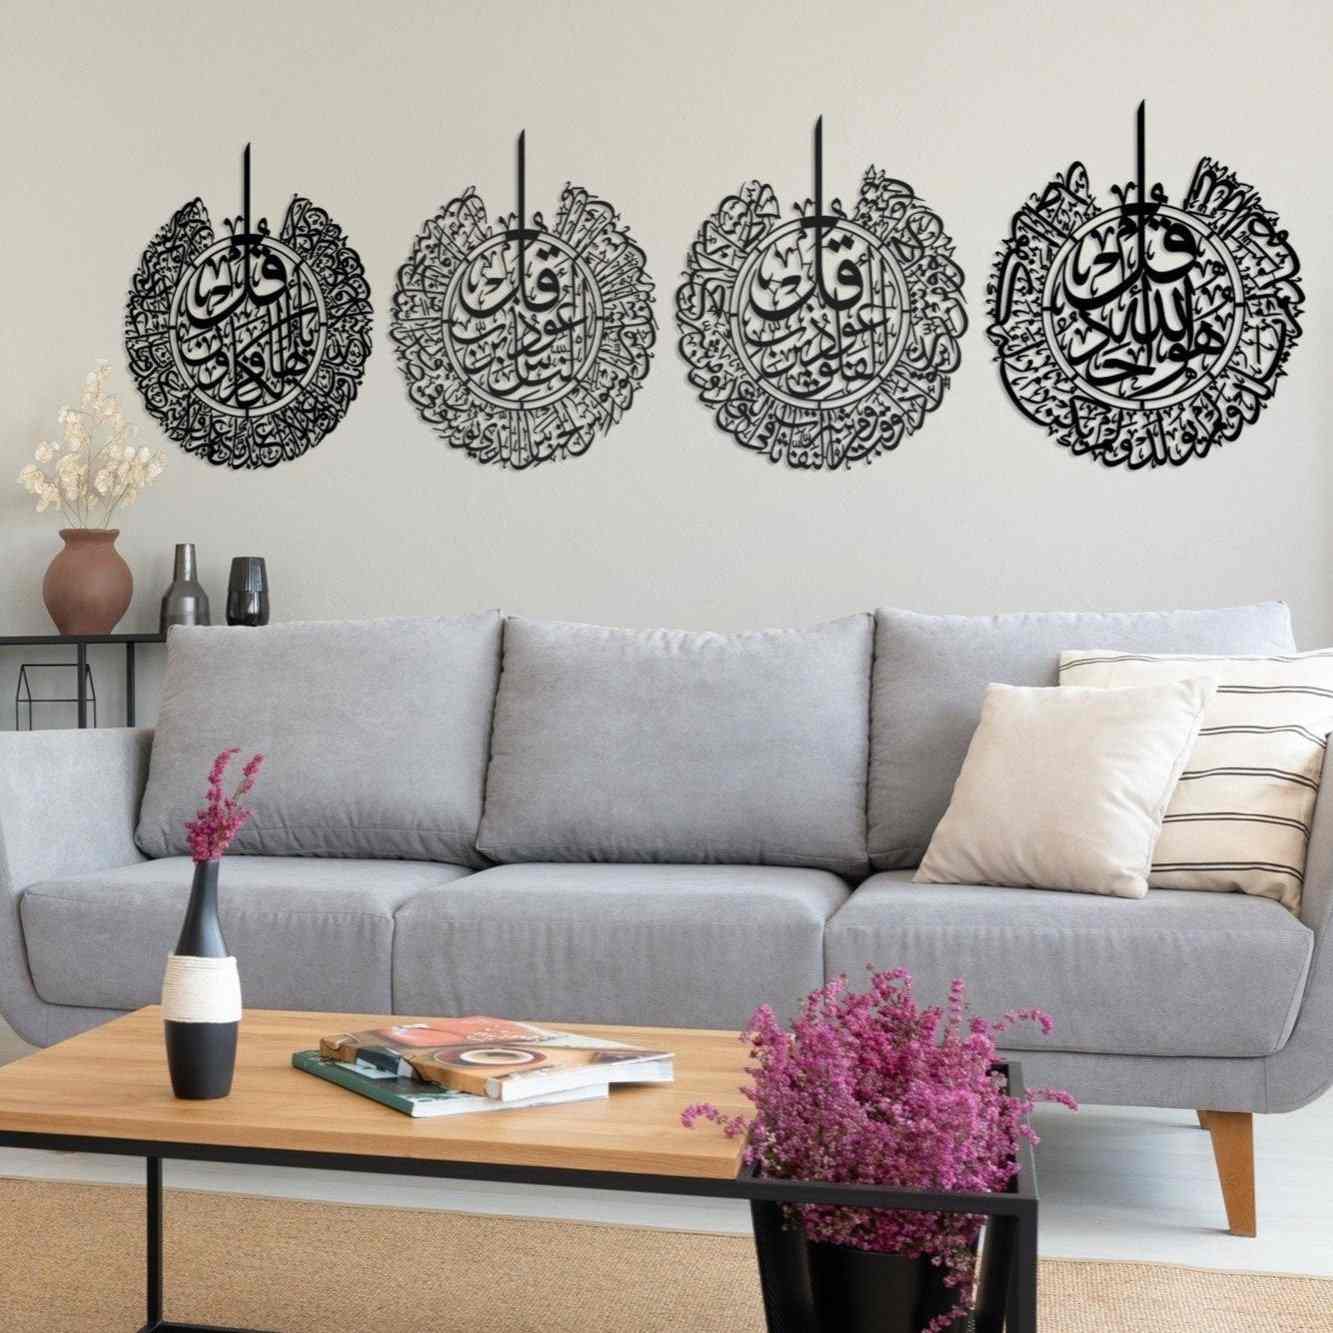 Islamic Wall Sticker Mirror Effect with 4 Qul Surah Pattern